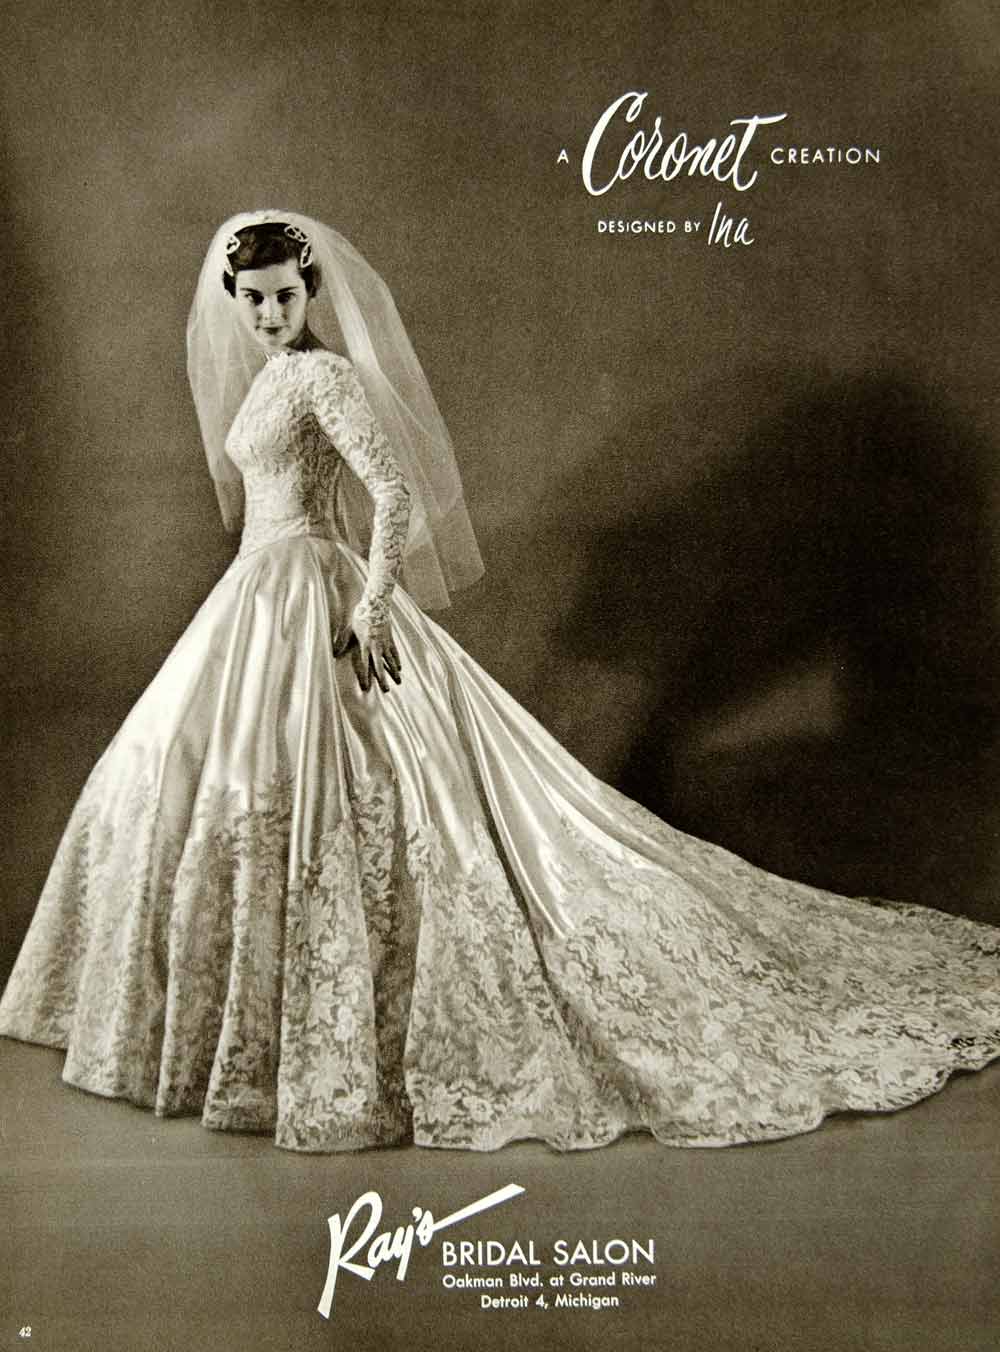 1956 Ad Coronet Ina Wedding Dress Gown Bride Veil Lace Rays Bridal Salon YBSM2